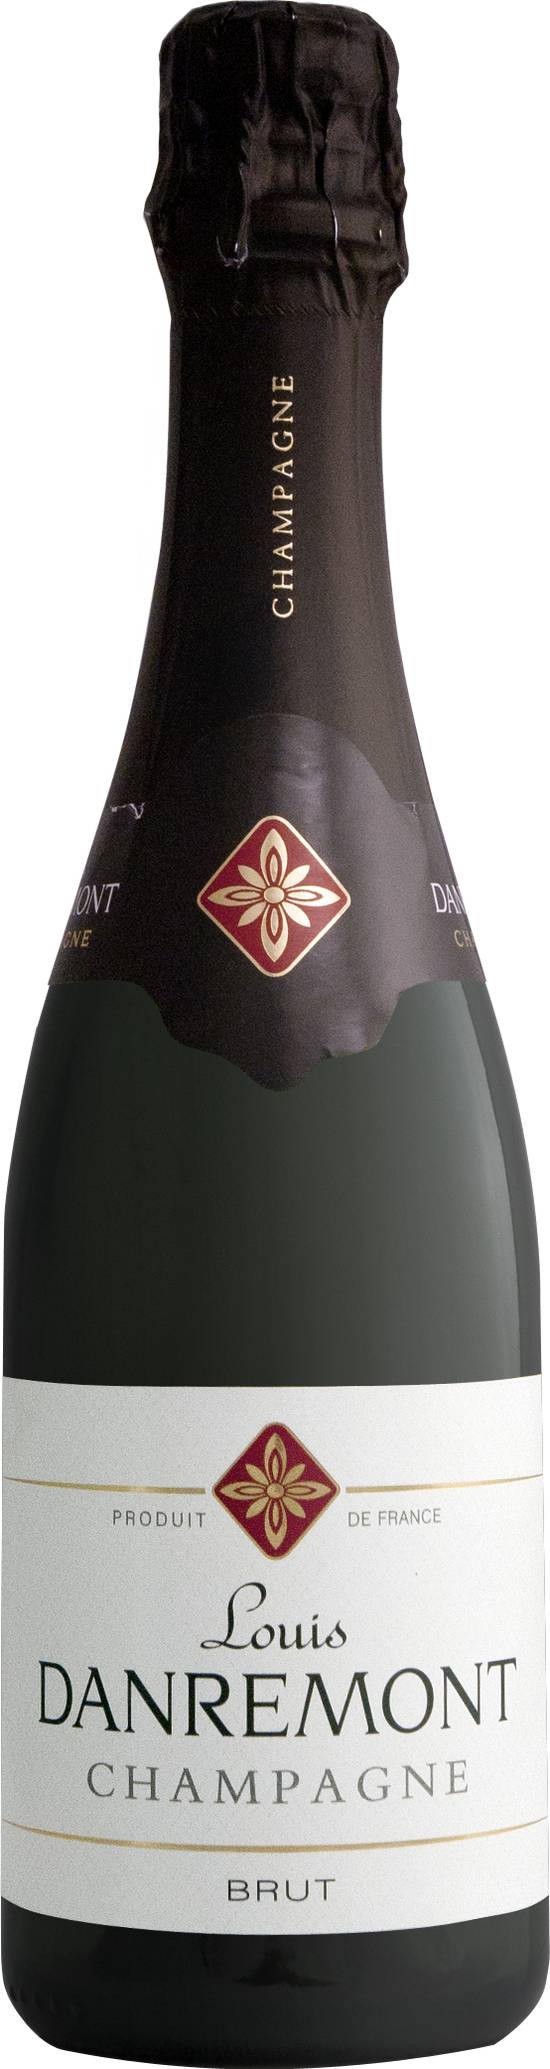 U - Louis danremont champagne brut (375 ml)